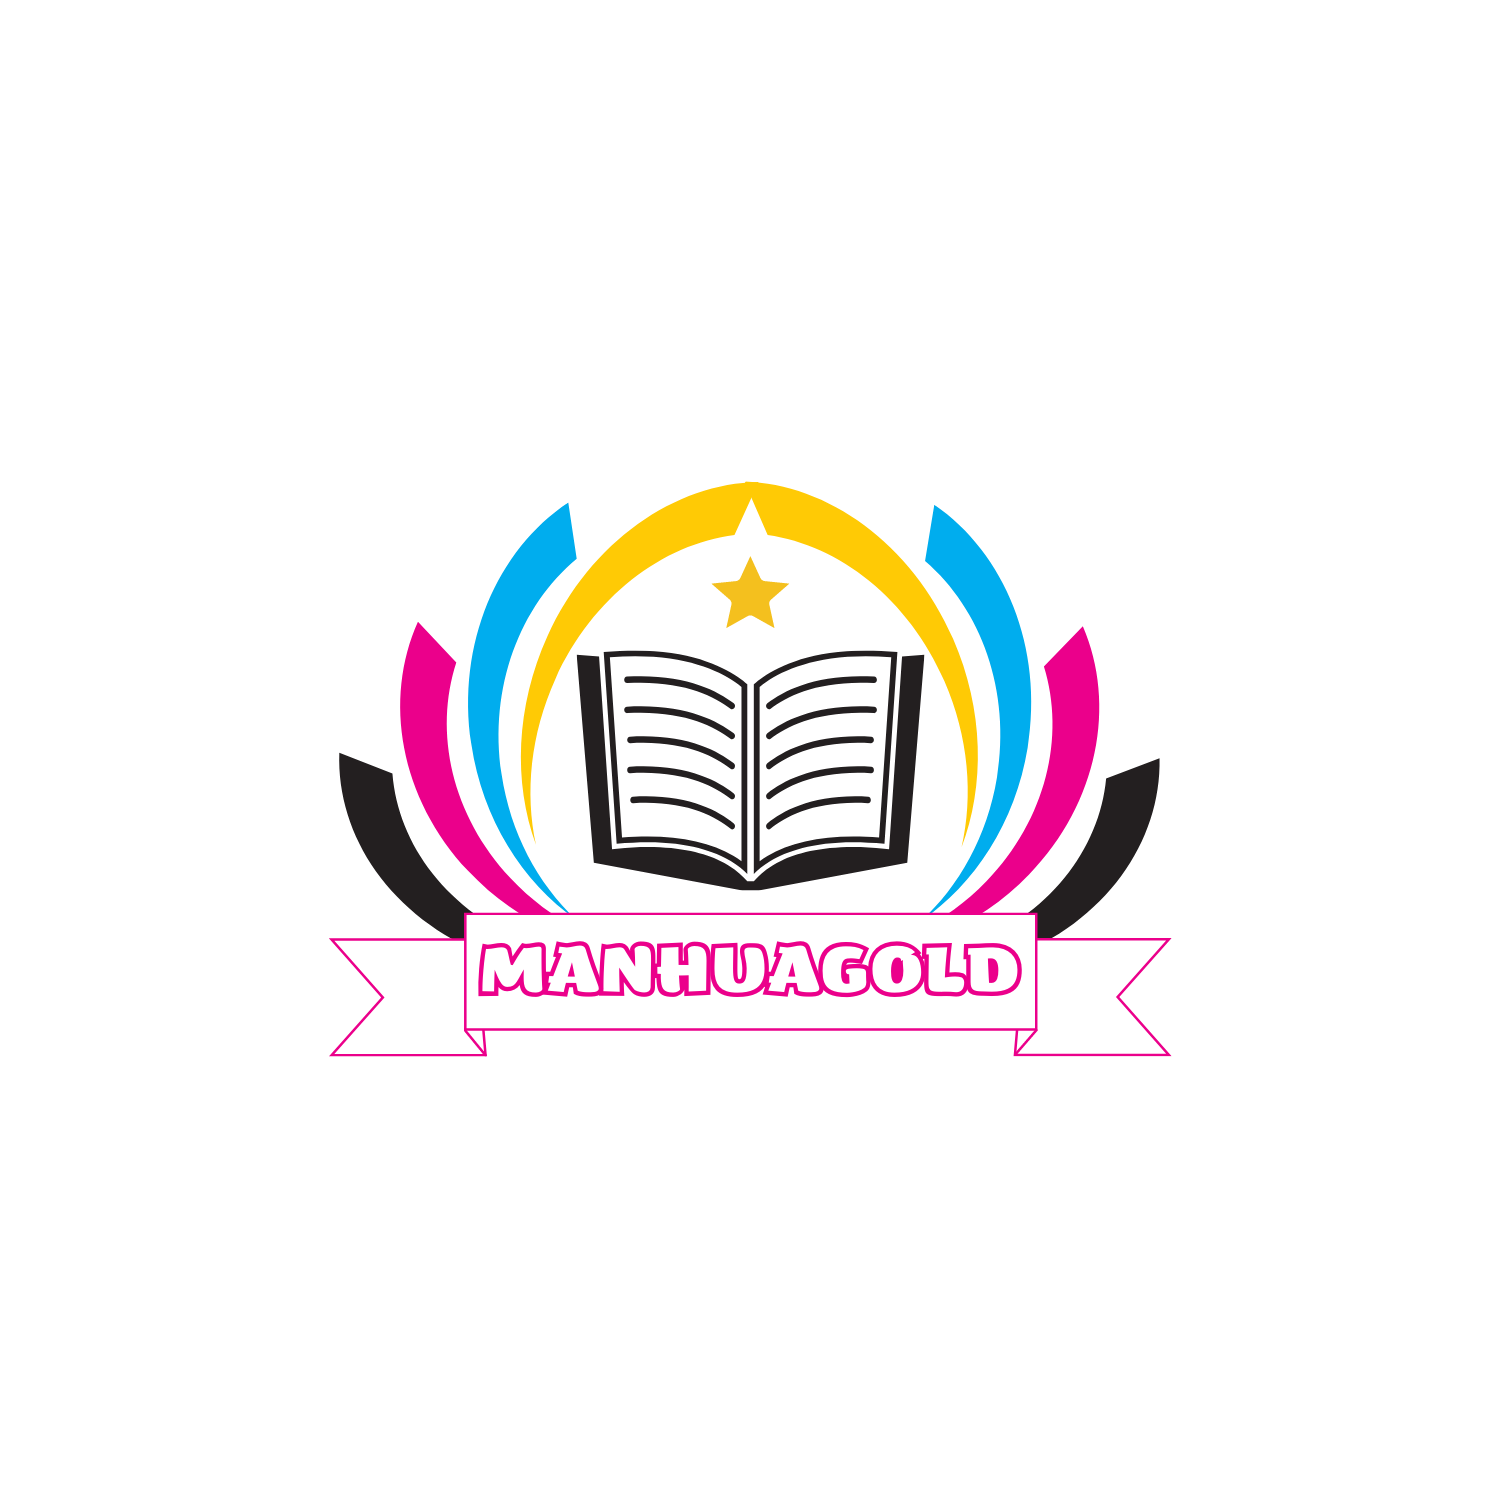 Manhuagold - Reading manhua